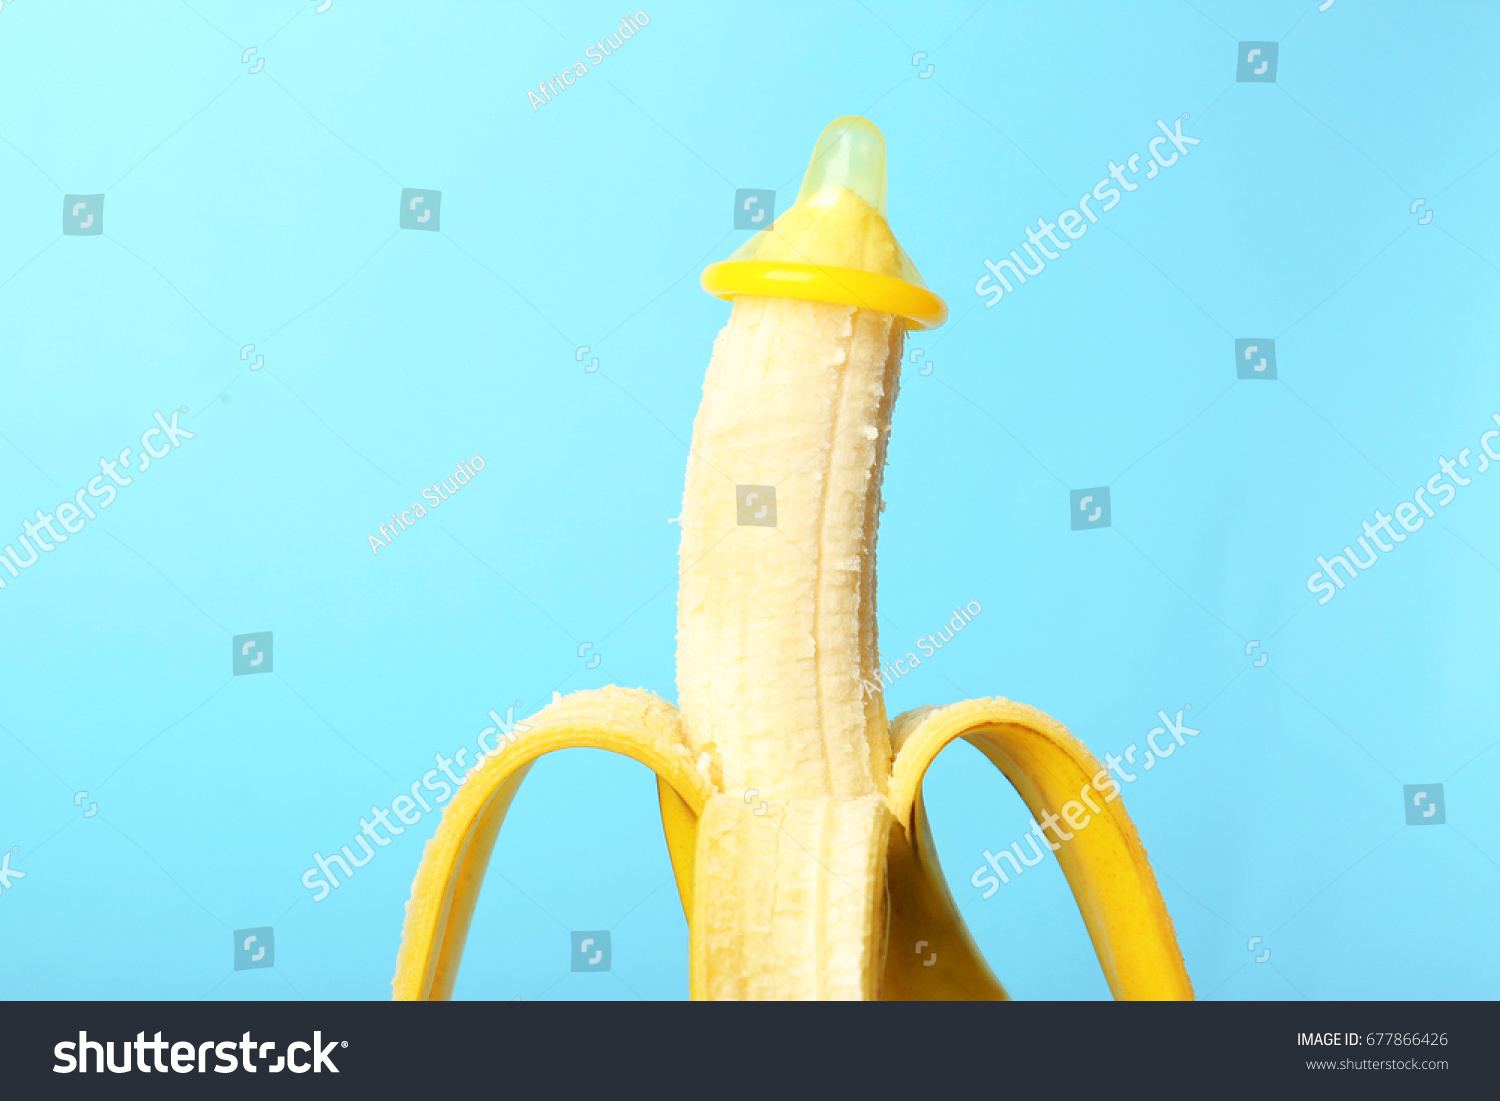 Condom on banana against color background. Safe sex concept #677866426